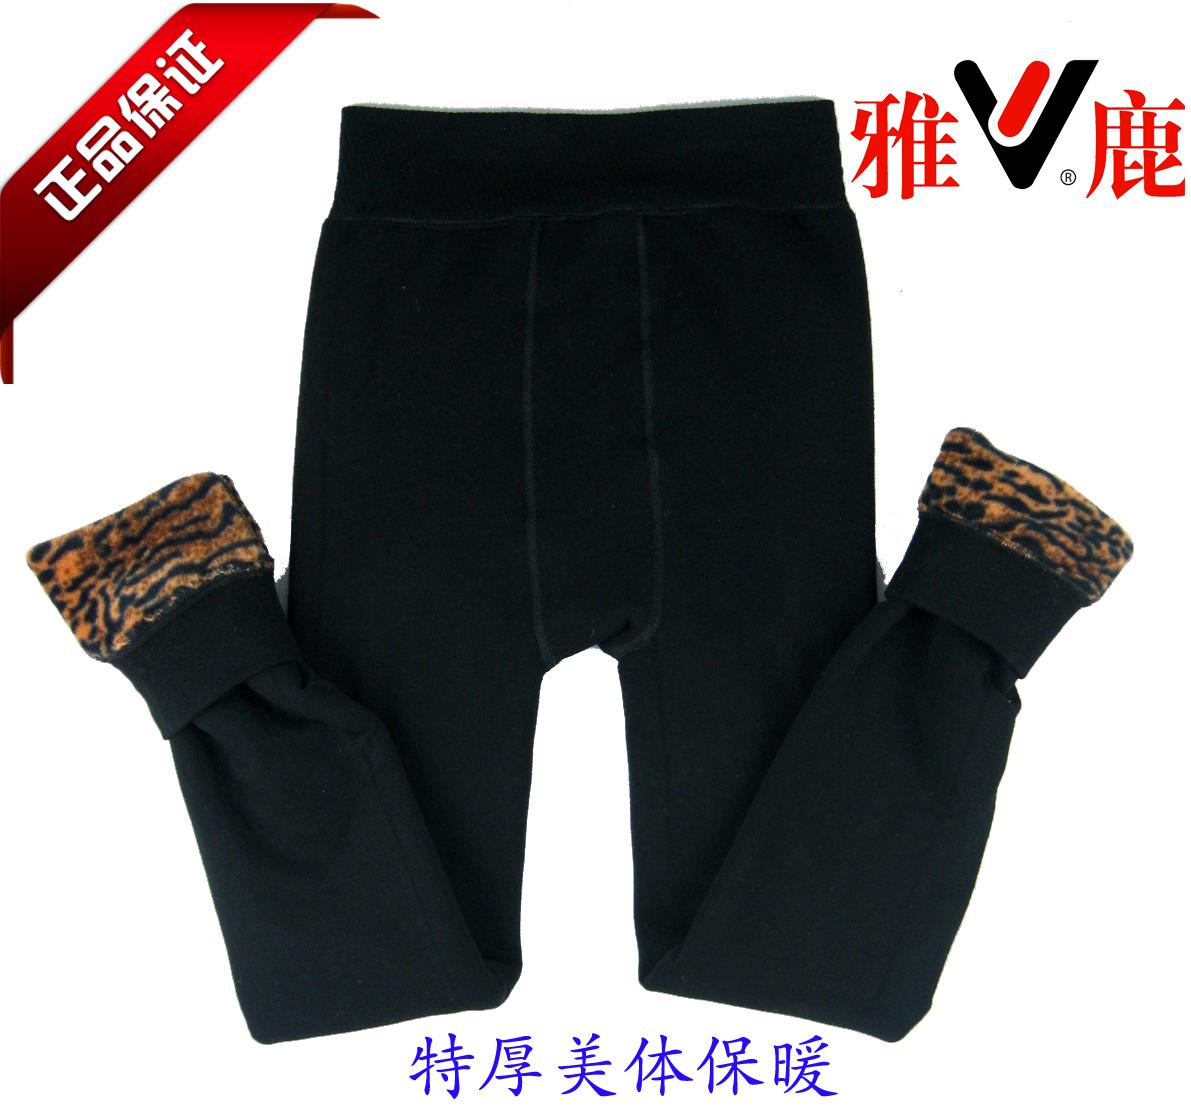 YALU 7130 women's beauty care warm pants trousers thickening warm pants boots pants